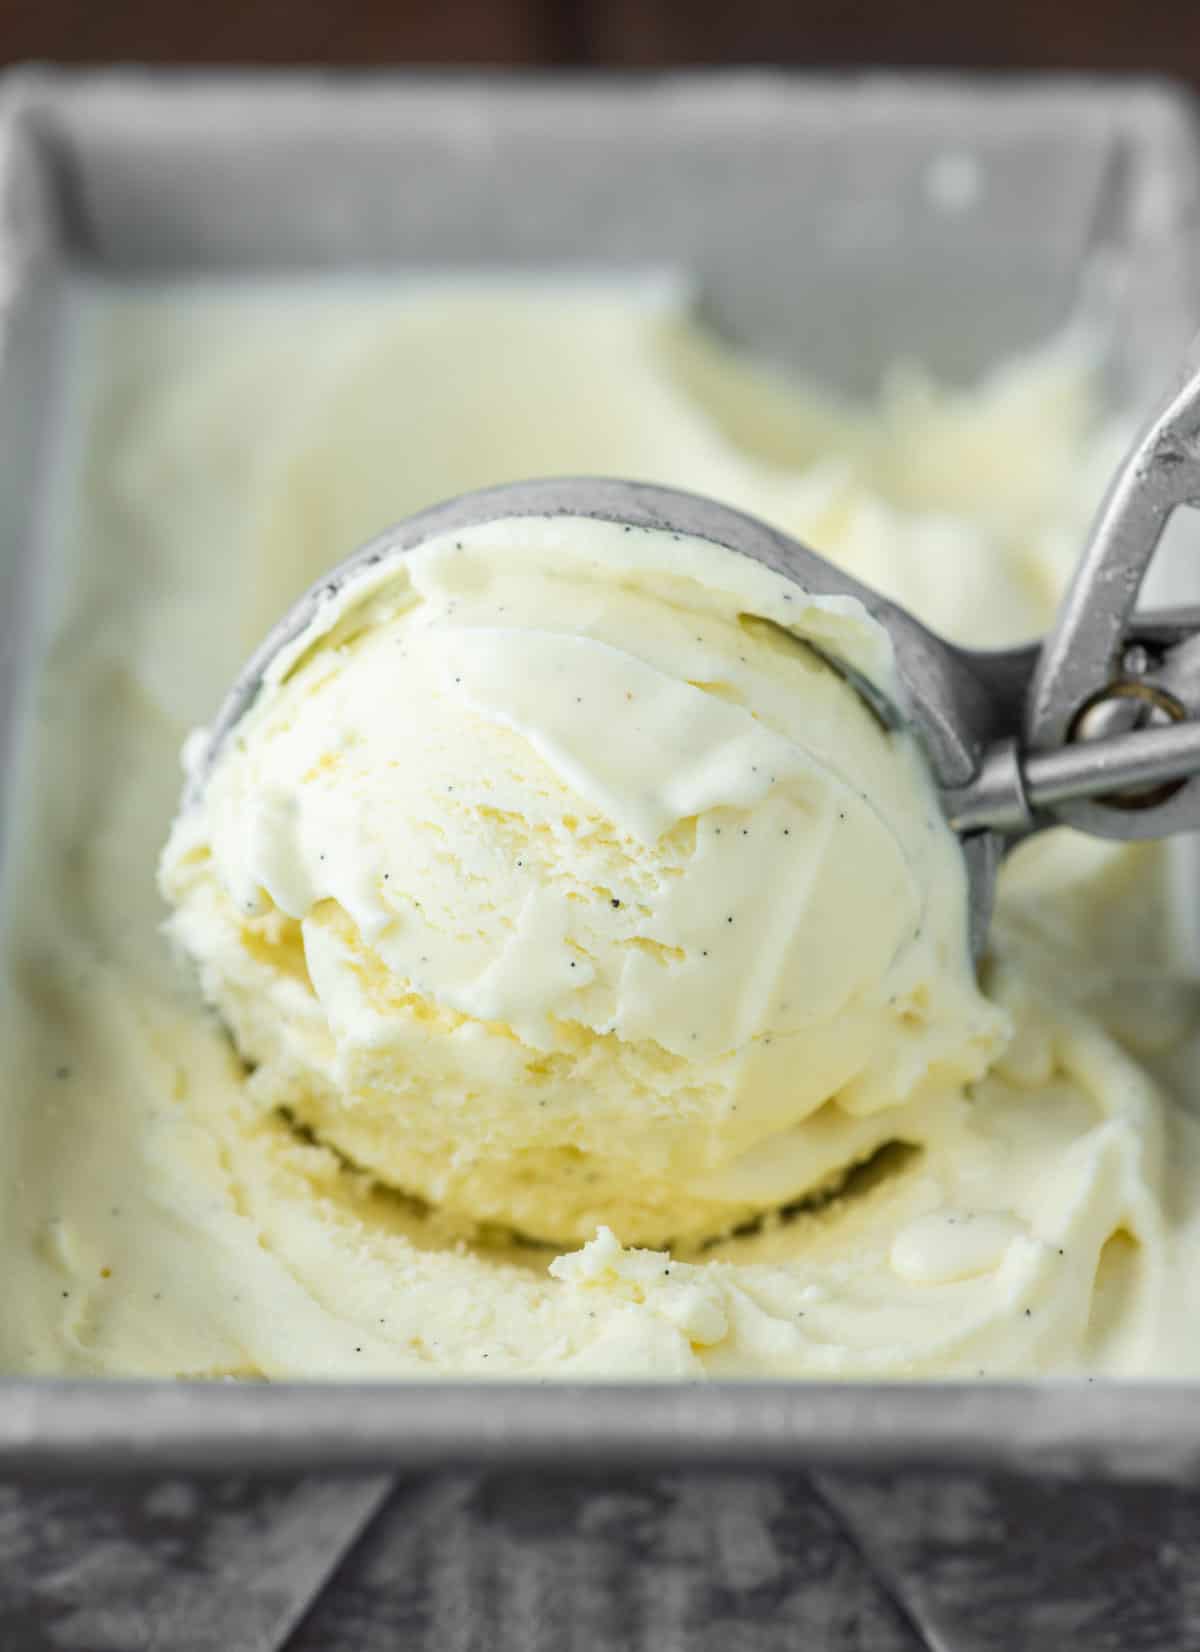 ice cream scoop scooping out vanilla bean ice cream from metal tin